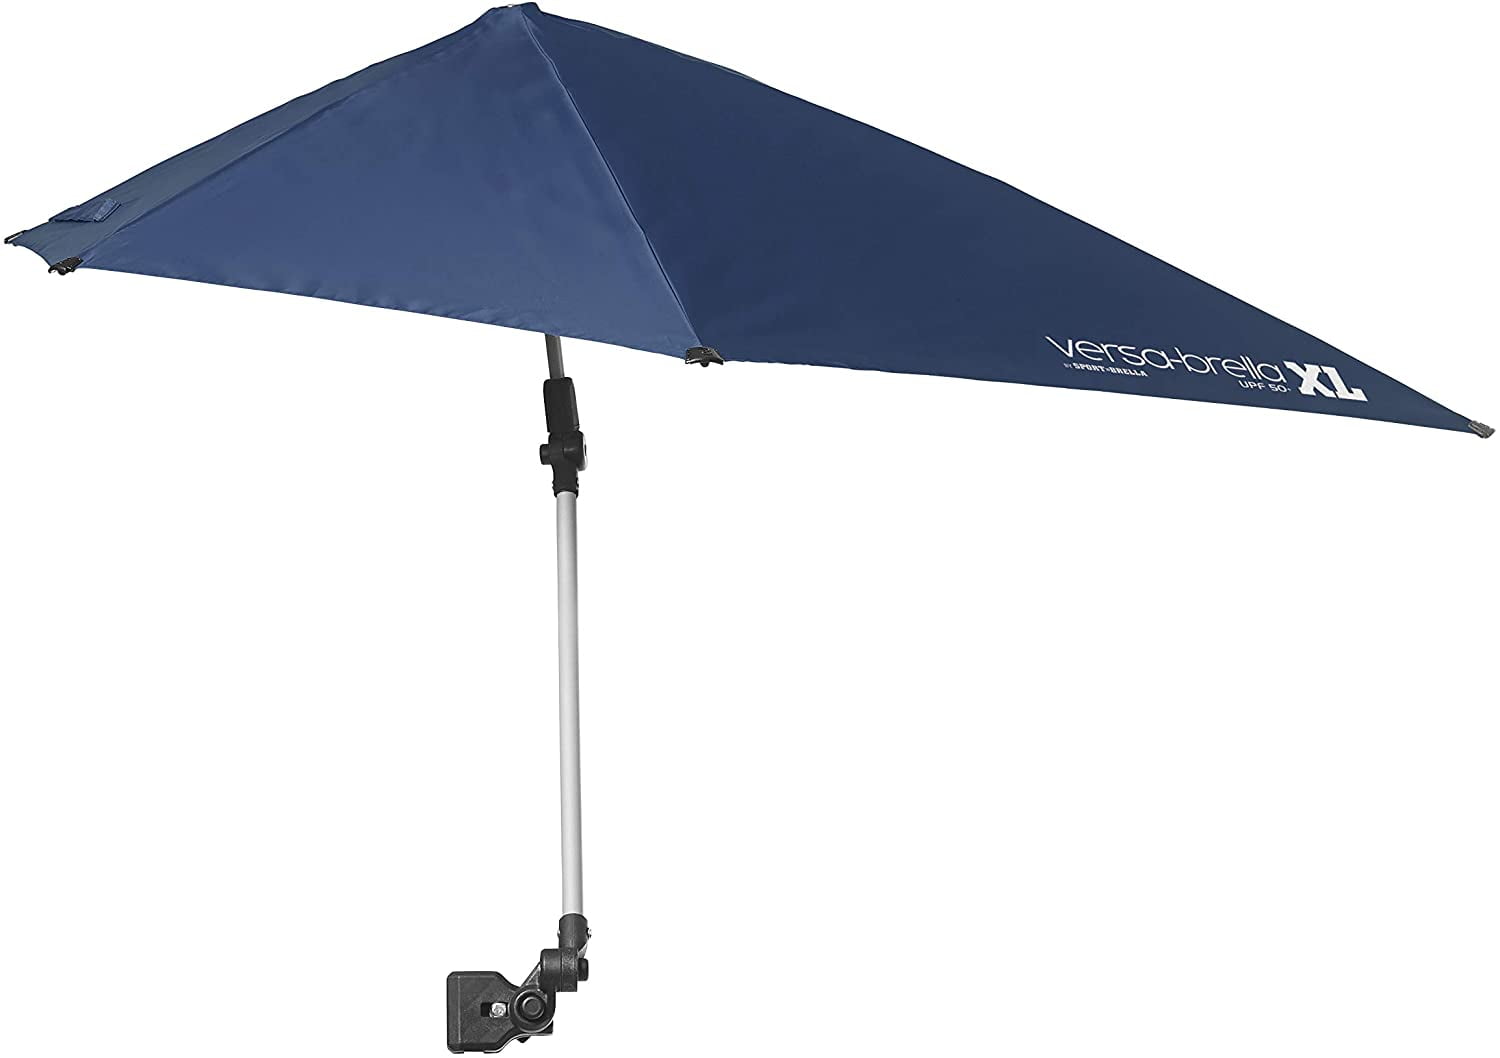 Sport-Brella Versa-Brella SPF50 Adjustable Umbrella with Universal Clamp,Blue 